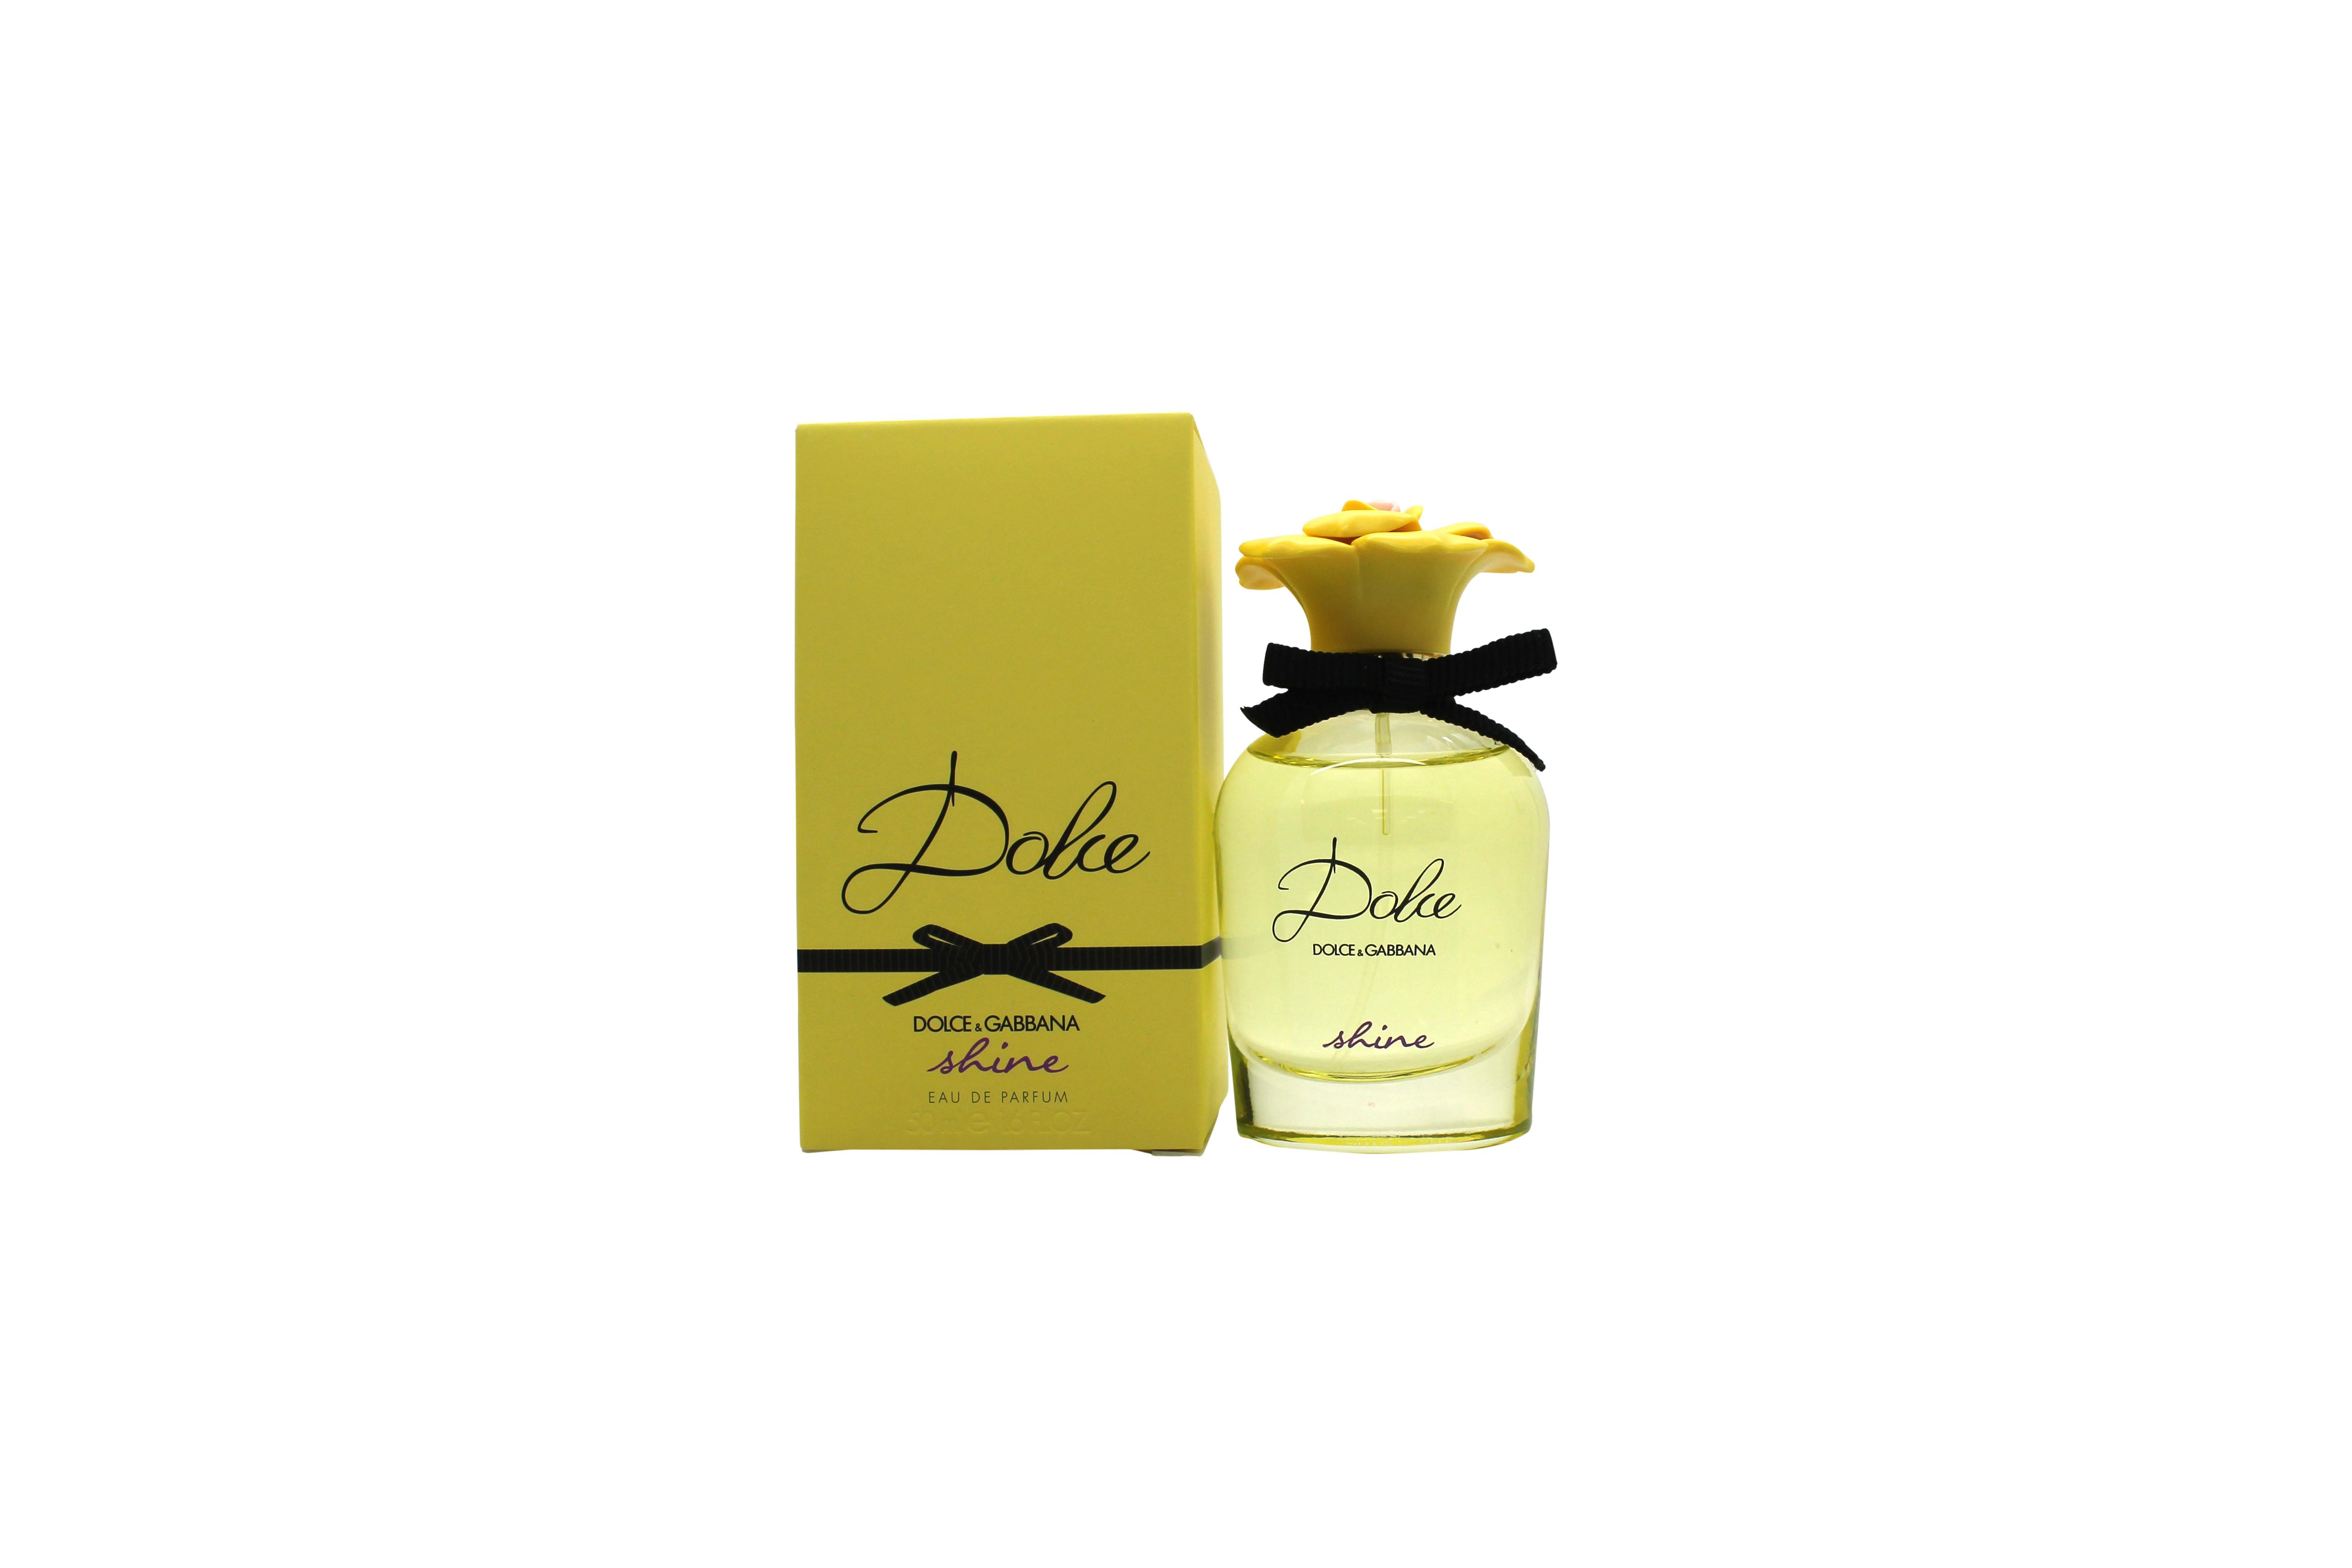 Dolce & Gabbana Dolce Shine Eau de Parfum 50ml Spray